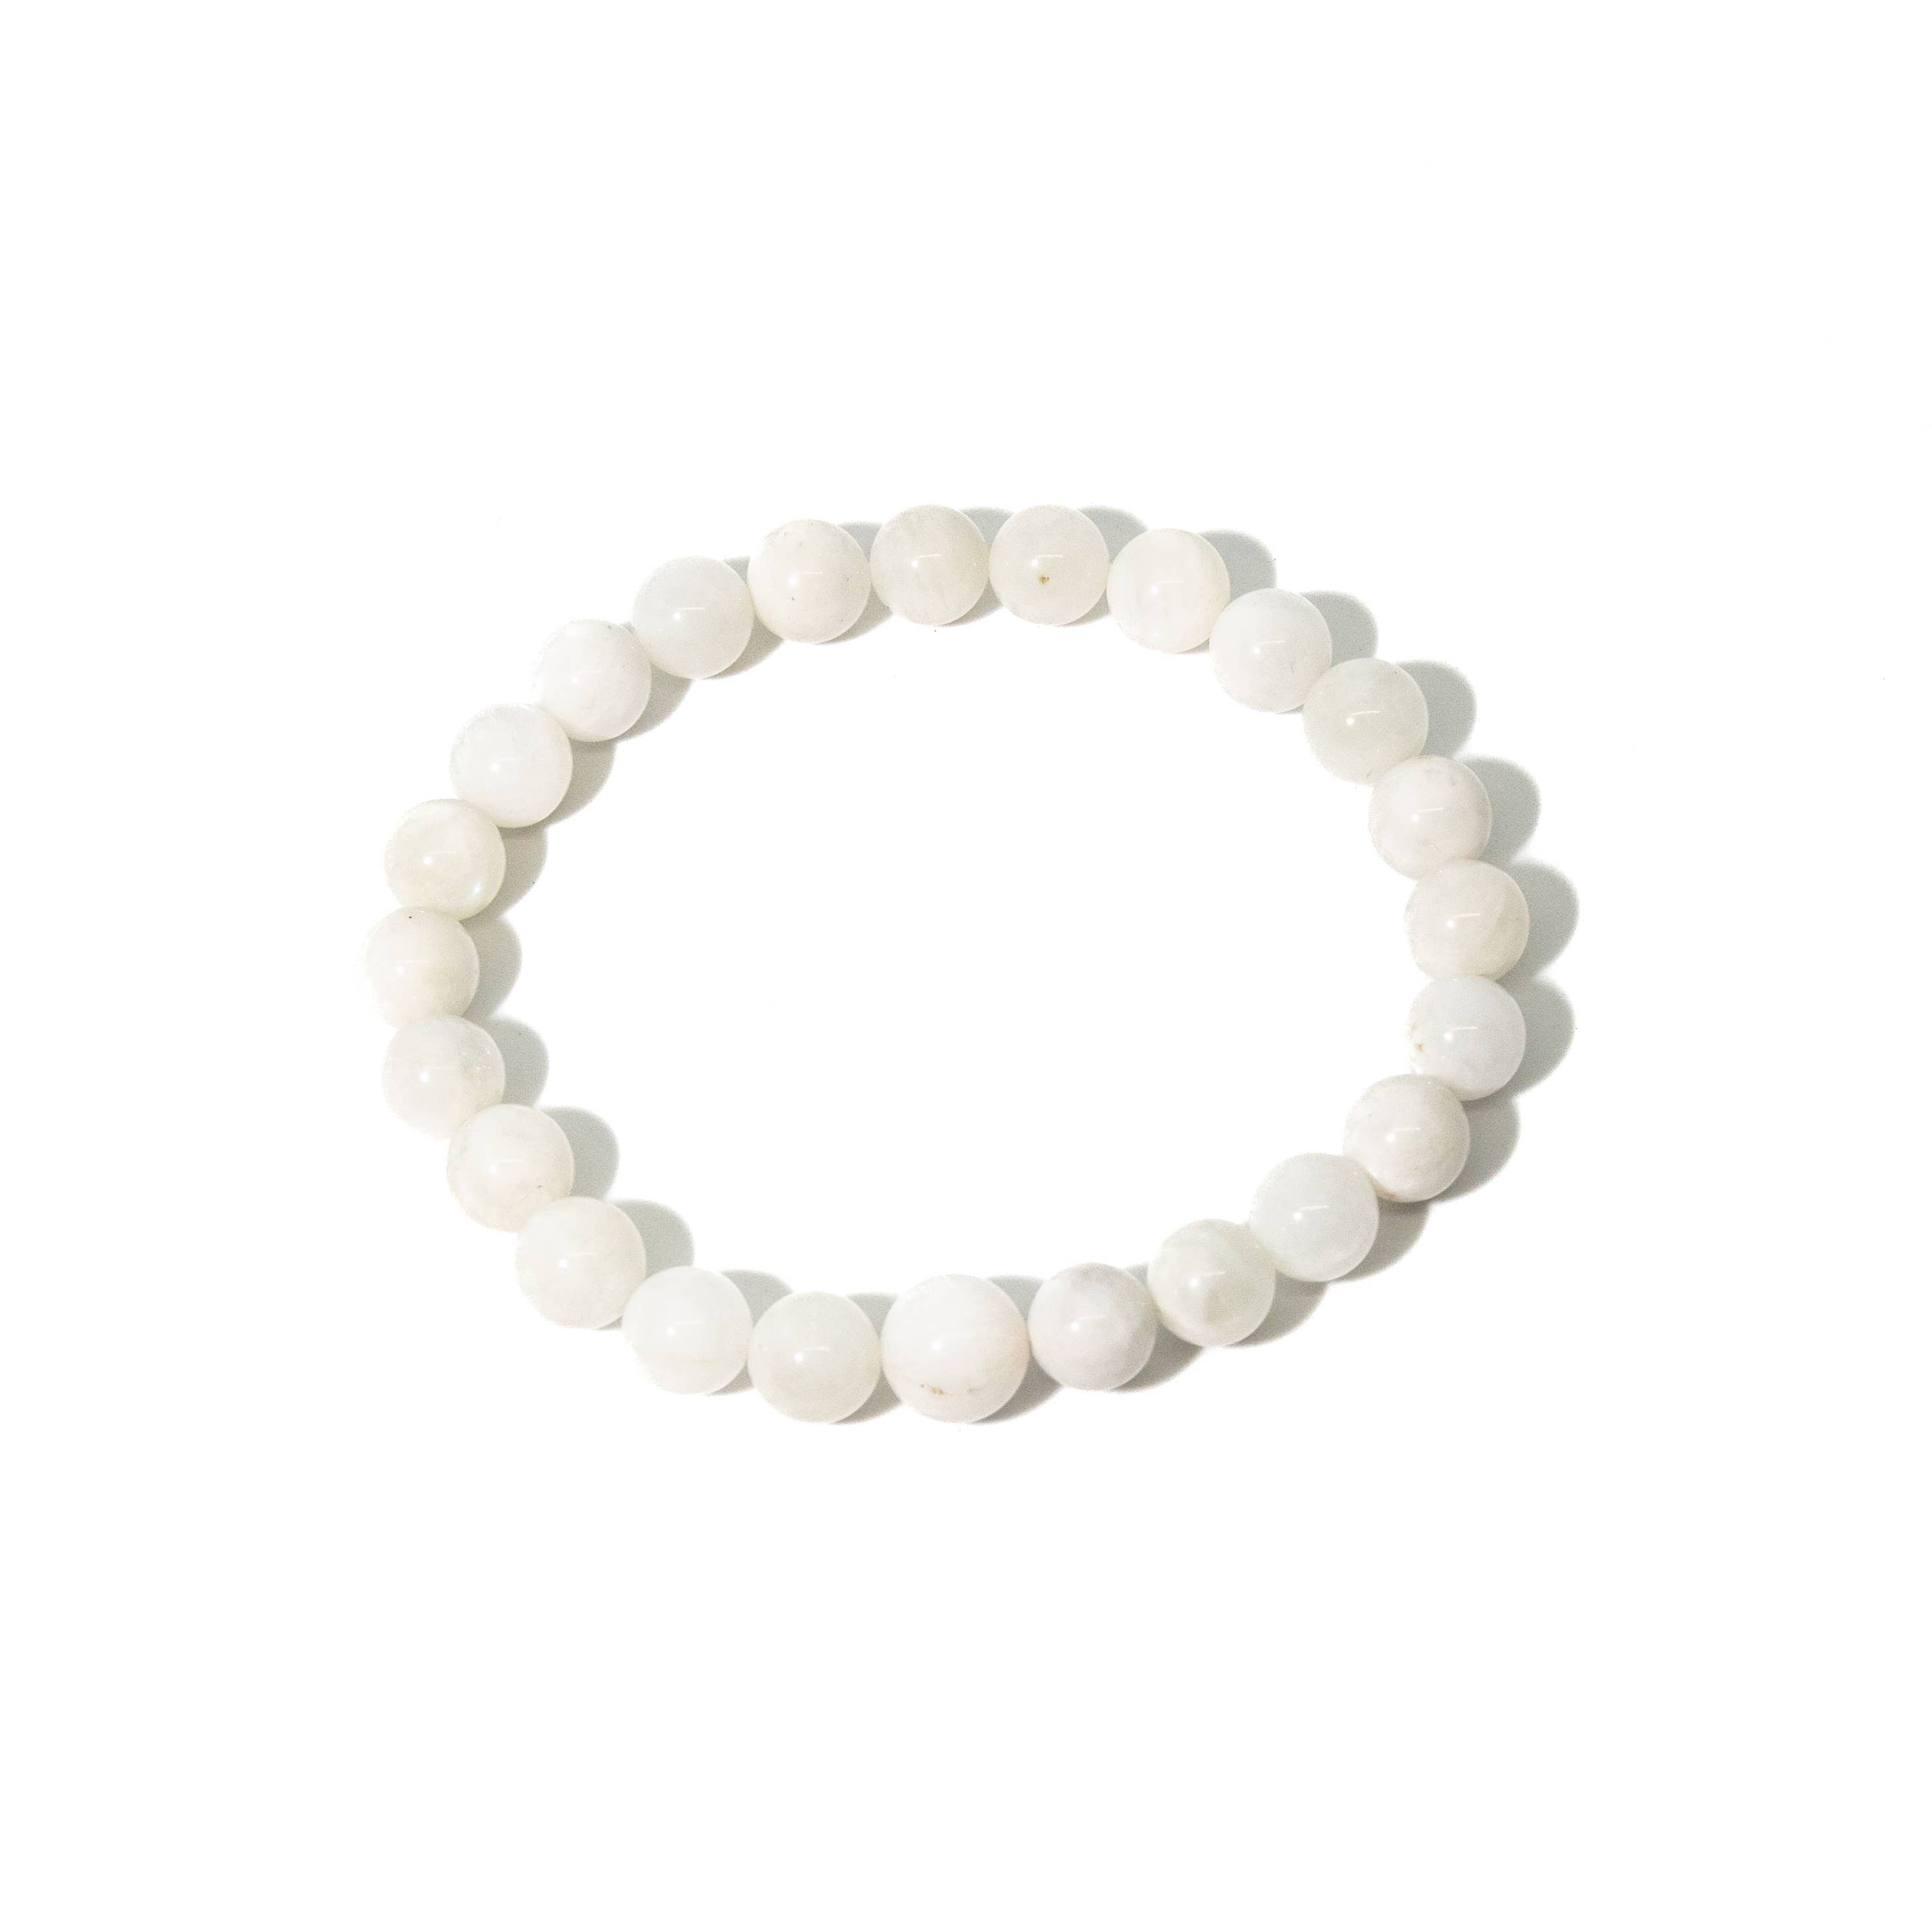 Moonstone Stretchy Beaded Bracelet - Wrist Mala Prayer Beads - 8mm